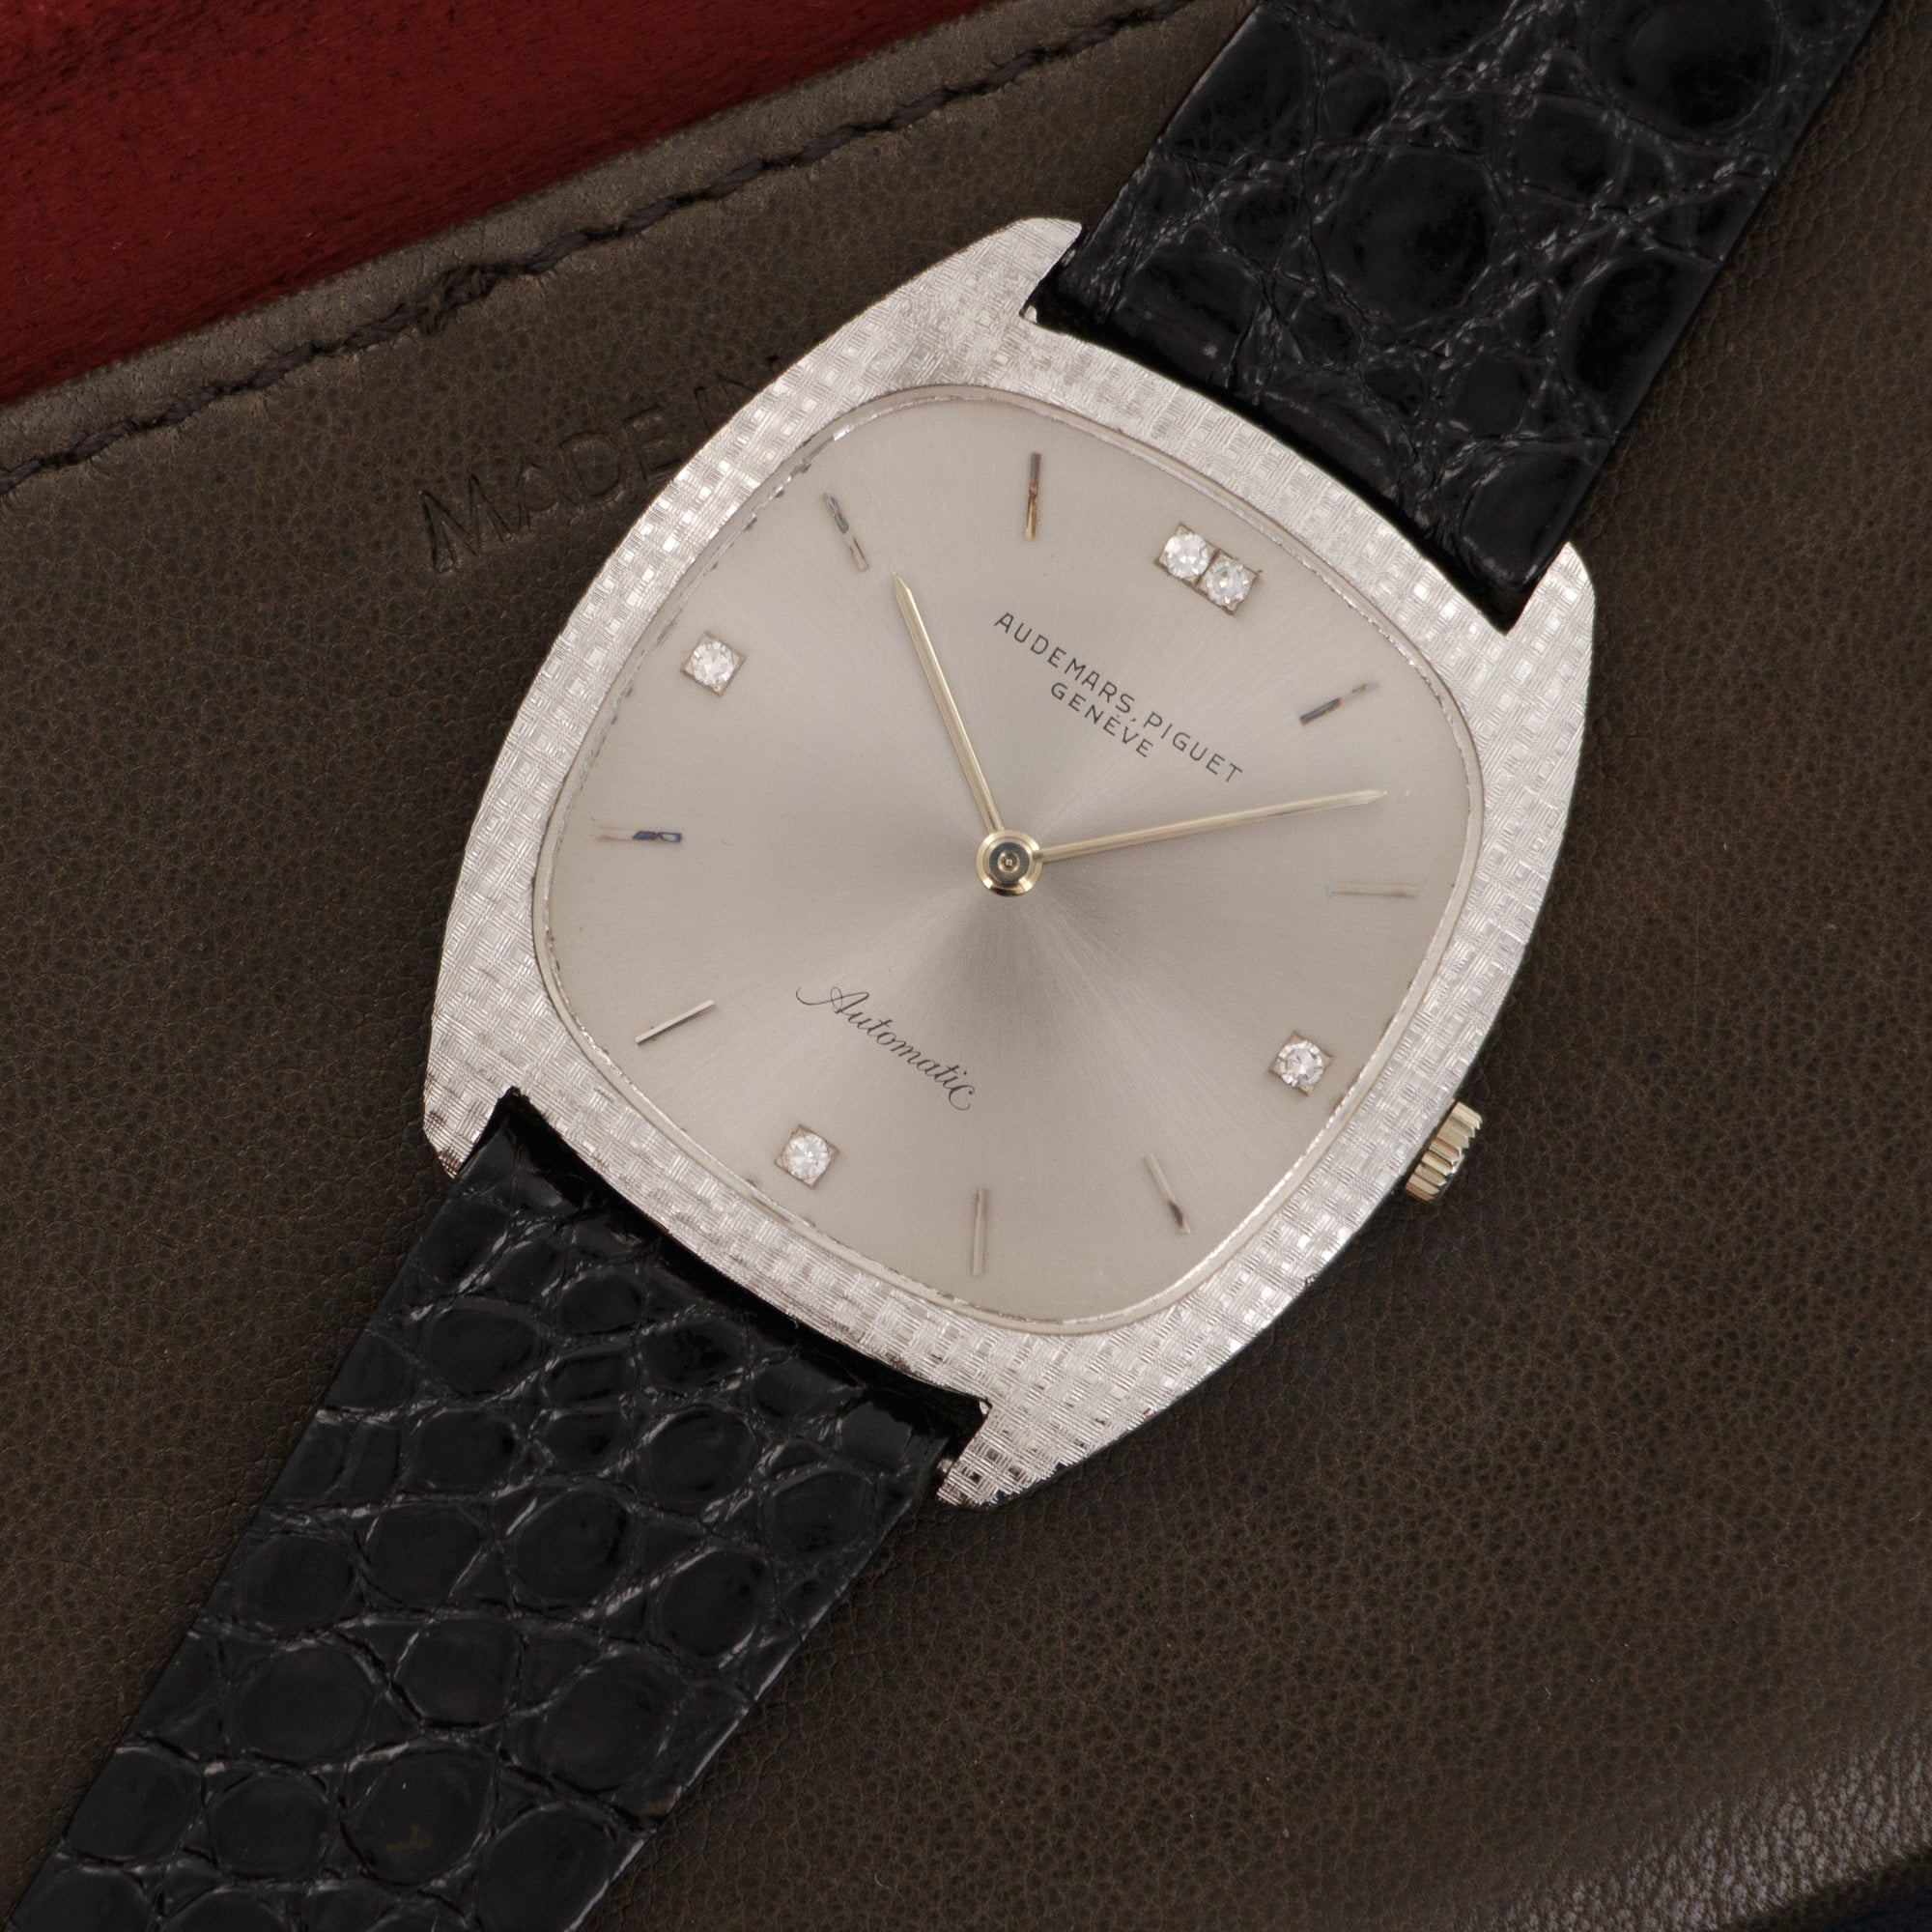 Audemars Piguet - Audemars Piguet White Gold Diamond Automatic Watch - The Keystone Watches